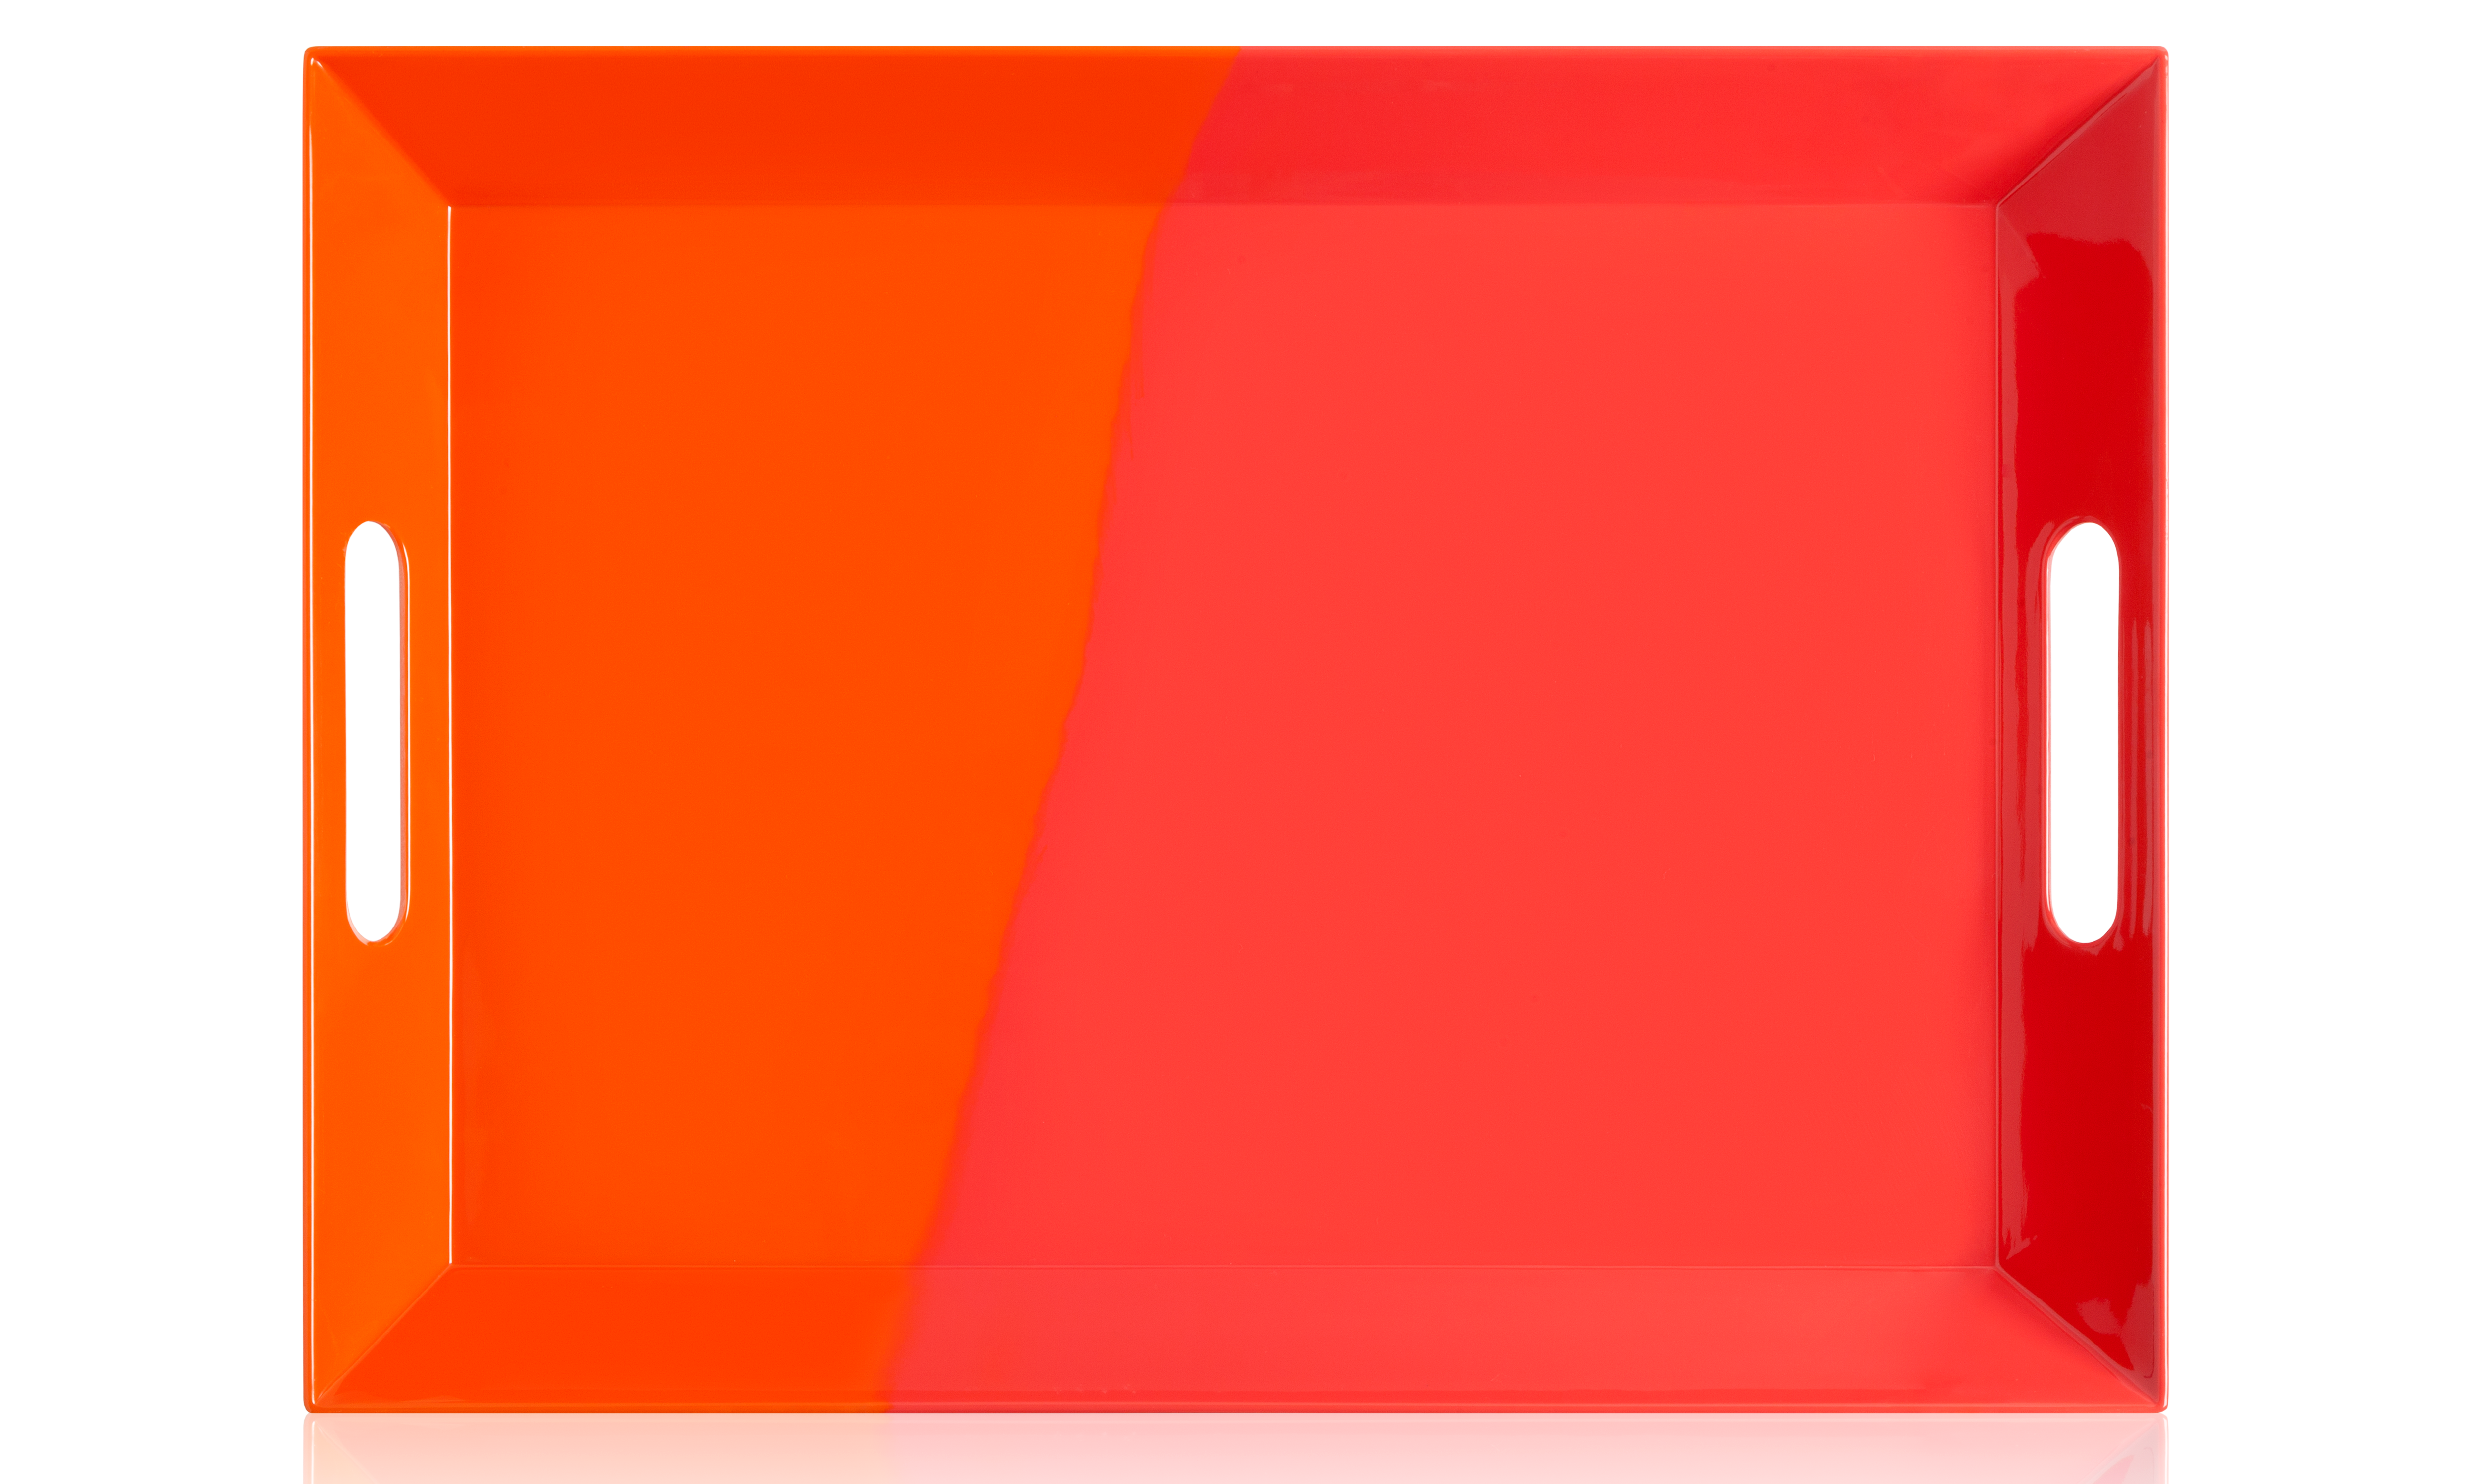 1/2 & 1/2 Melamine Serving Tray (Orange/ Red) Exclusive Design By Thomas Fuchs Creative